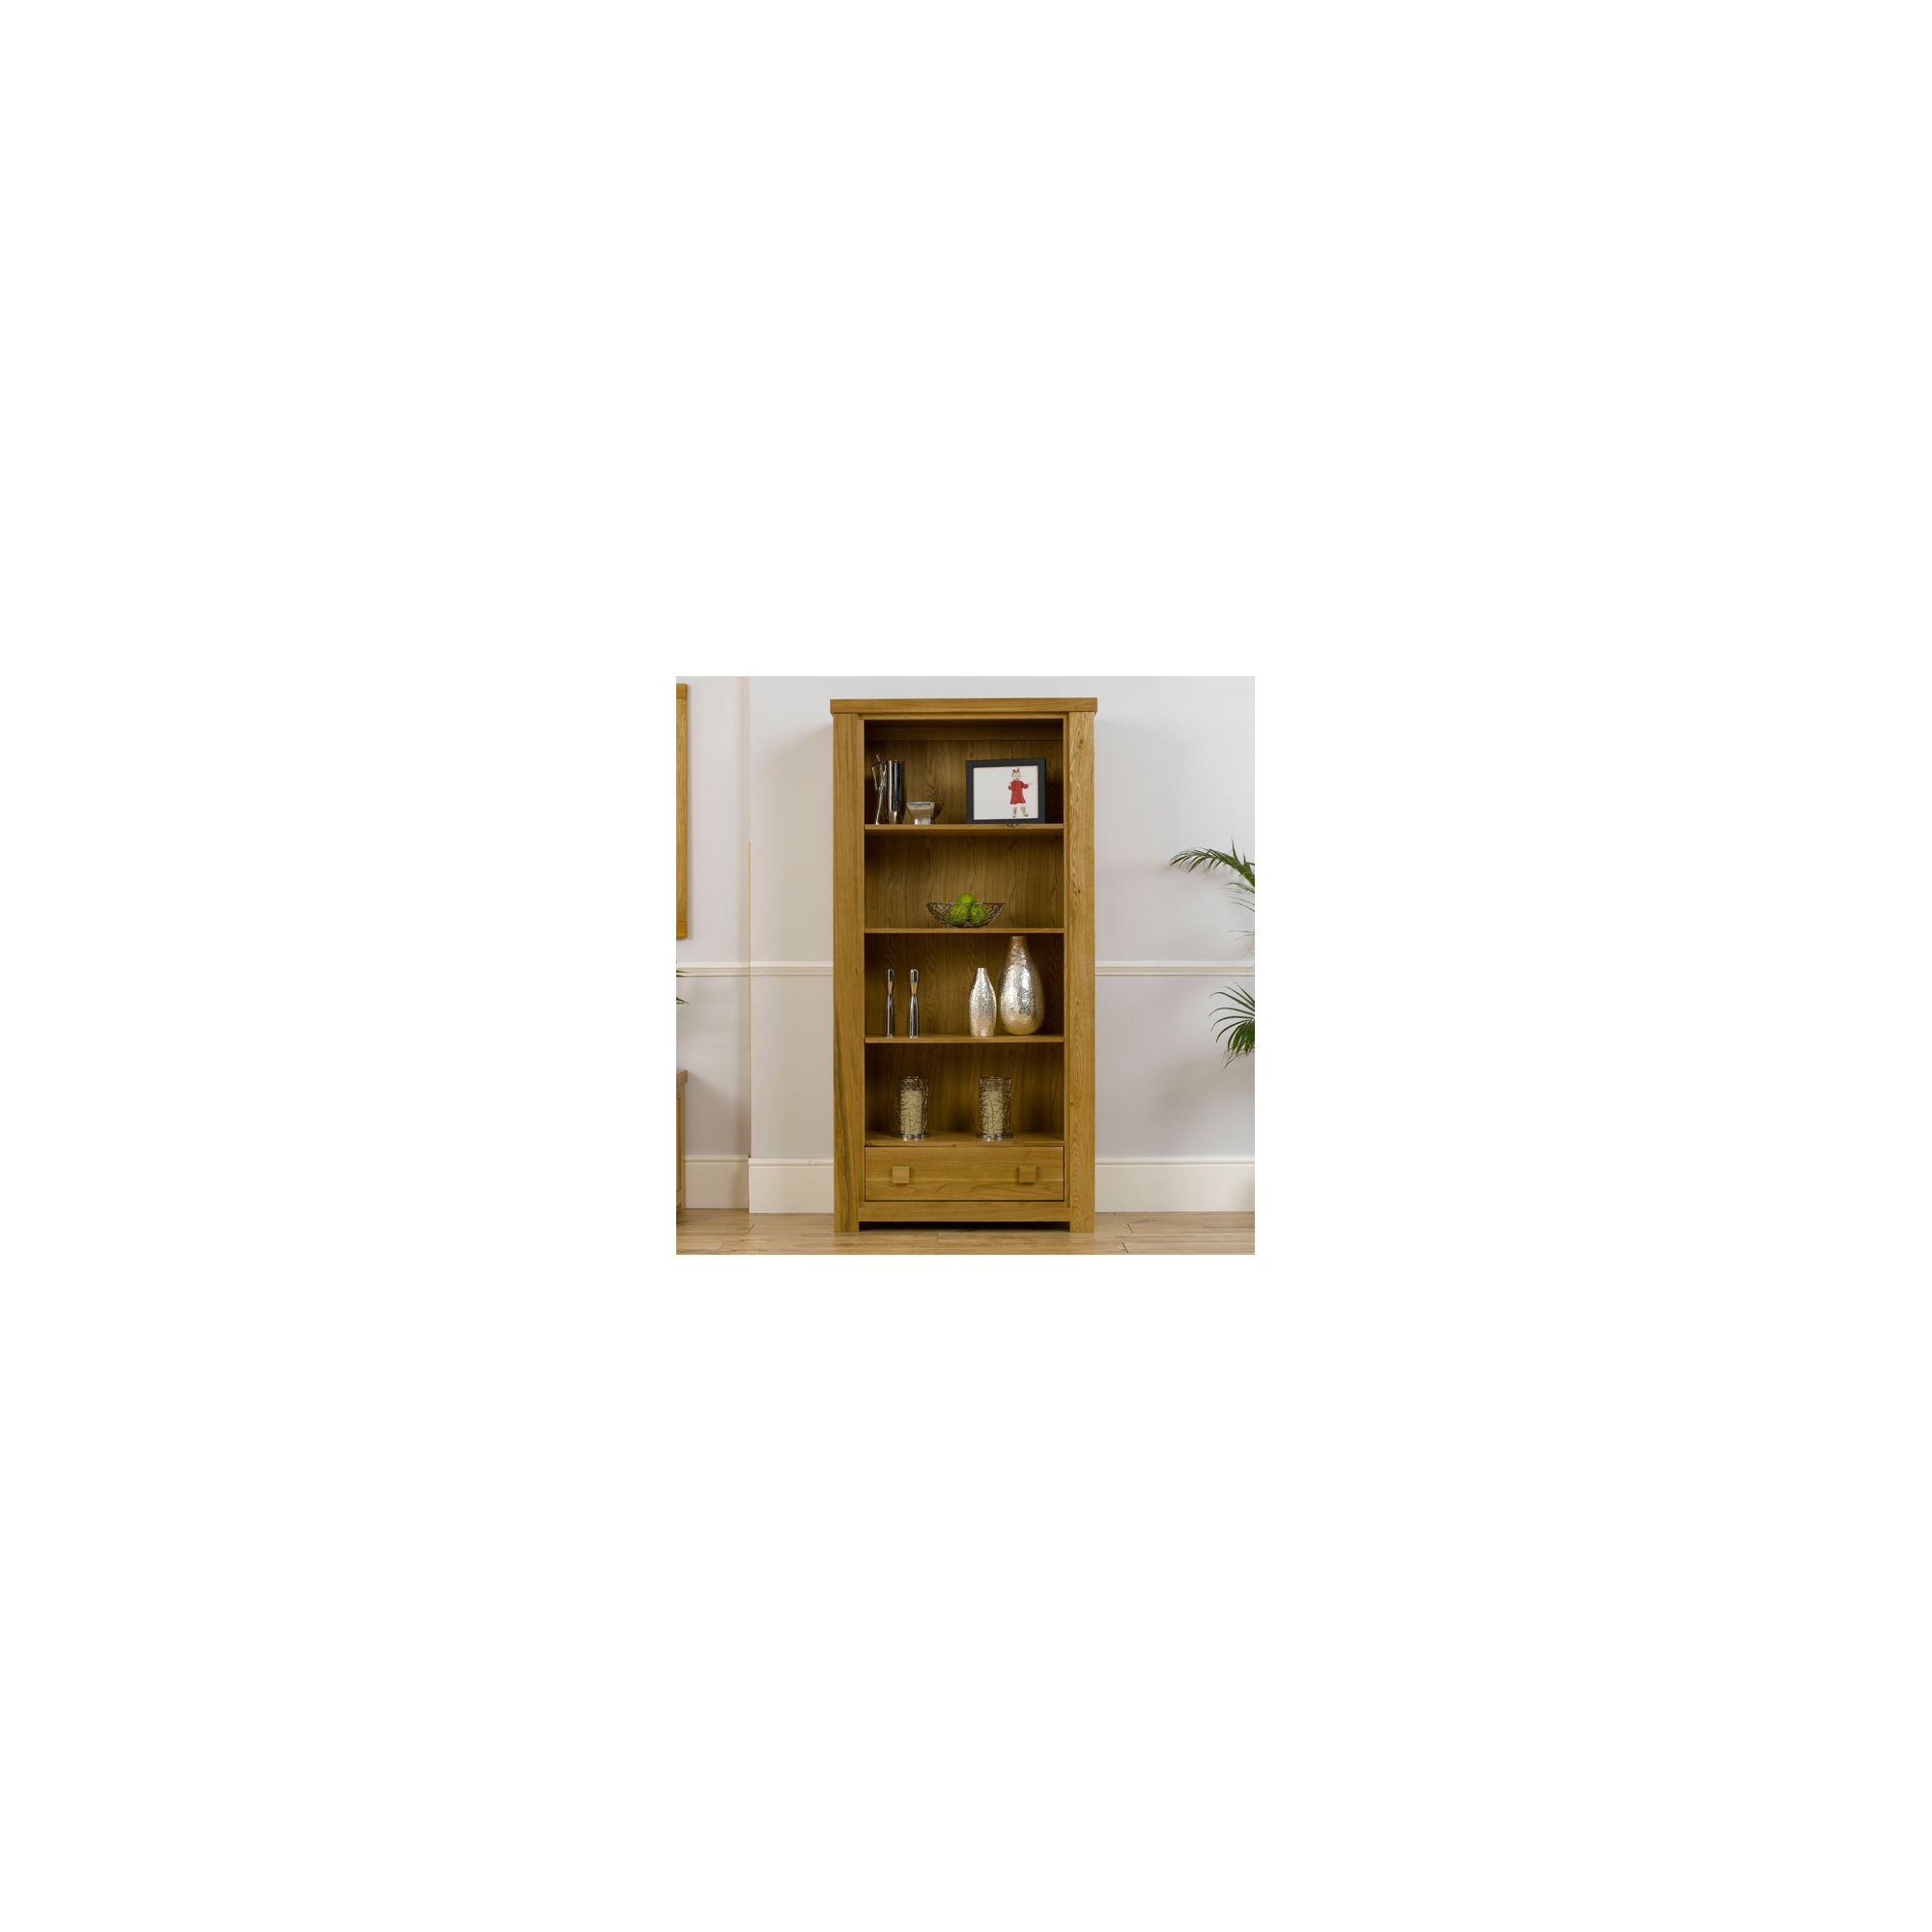 Mark Harris Furniture Barcelona Display Unit in Solid Oak at Tesco Direct